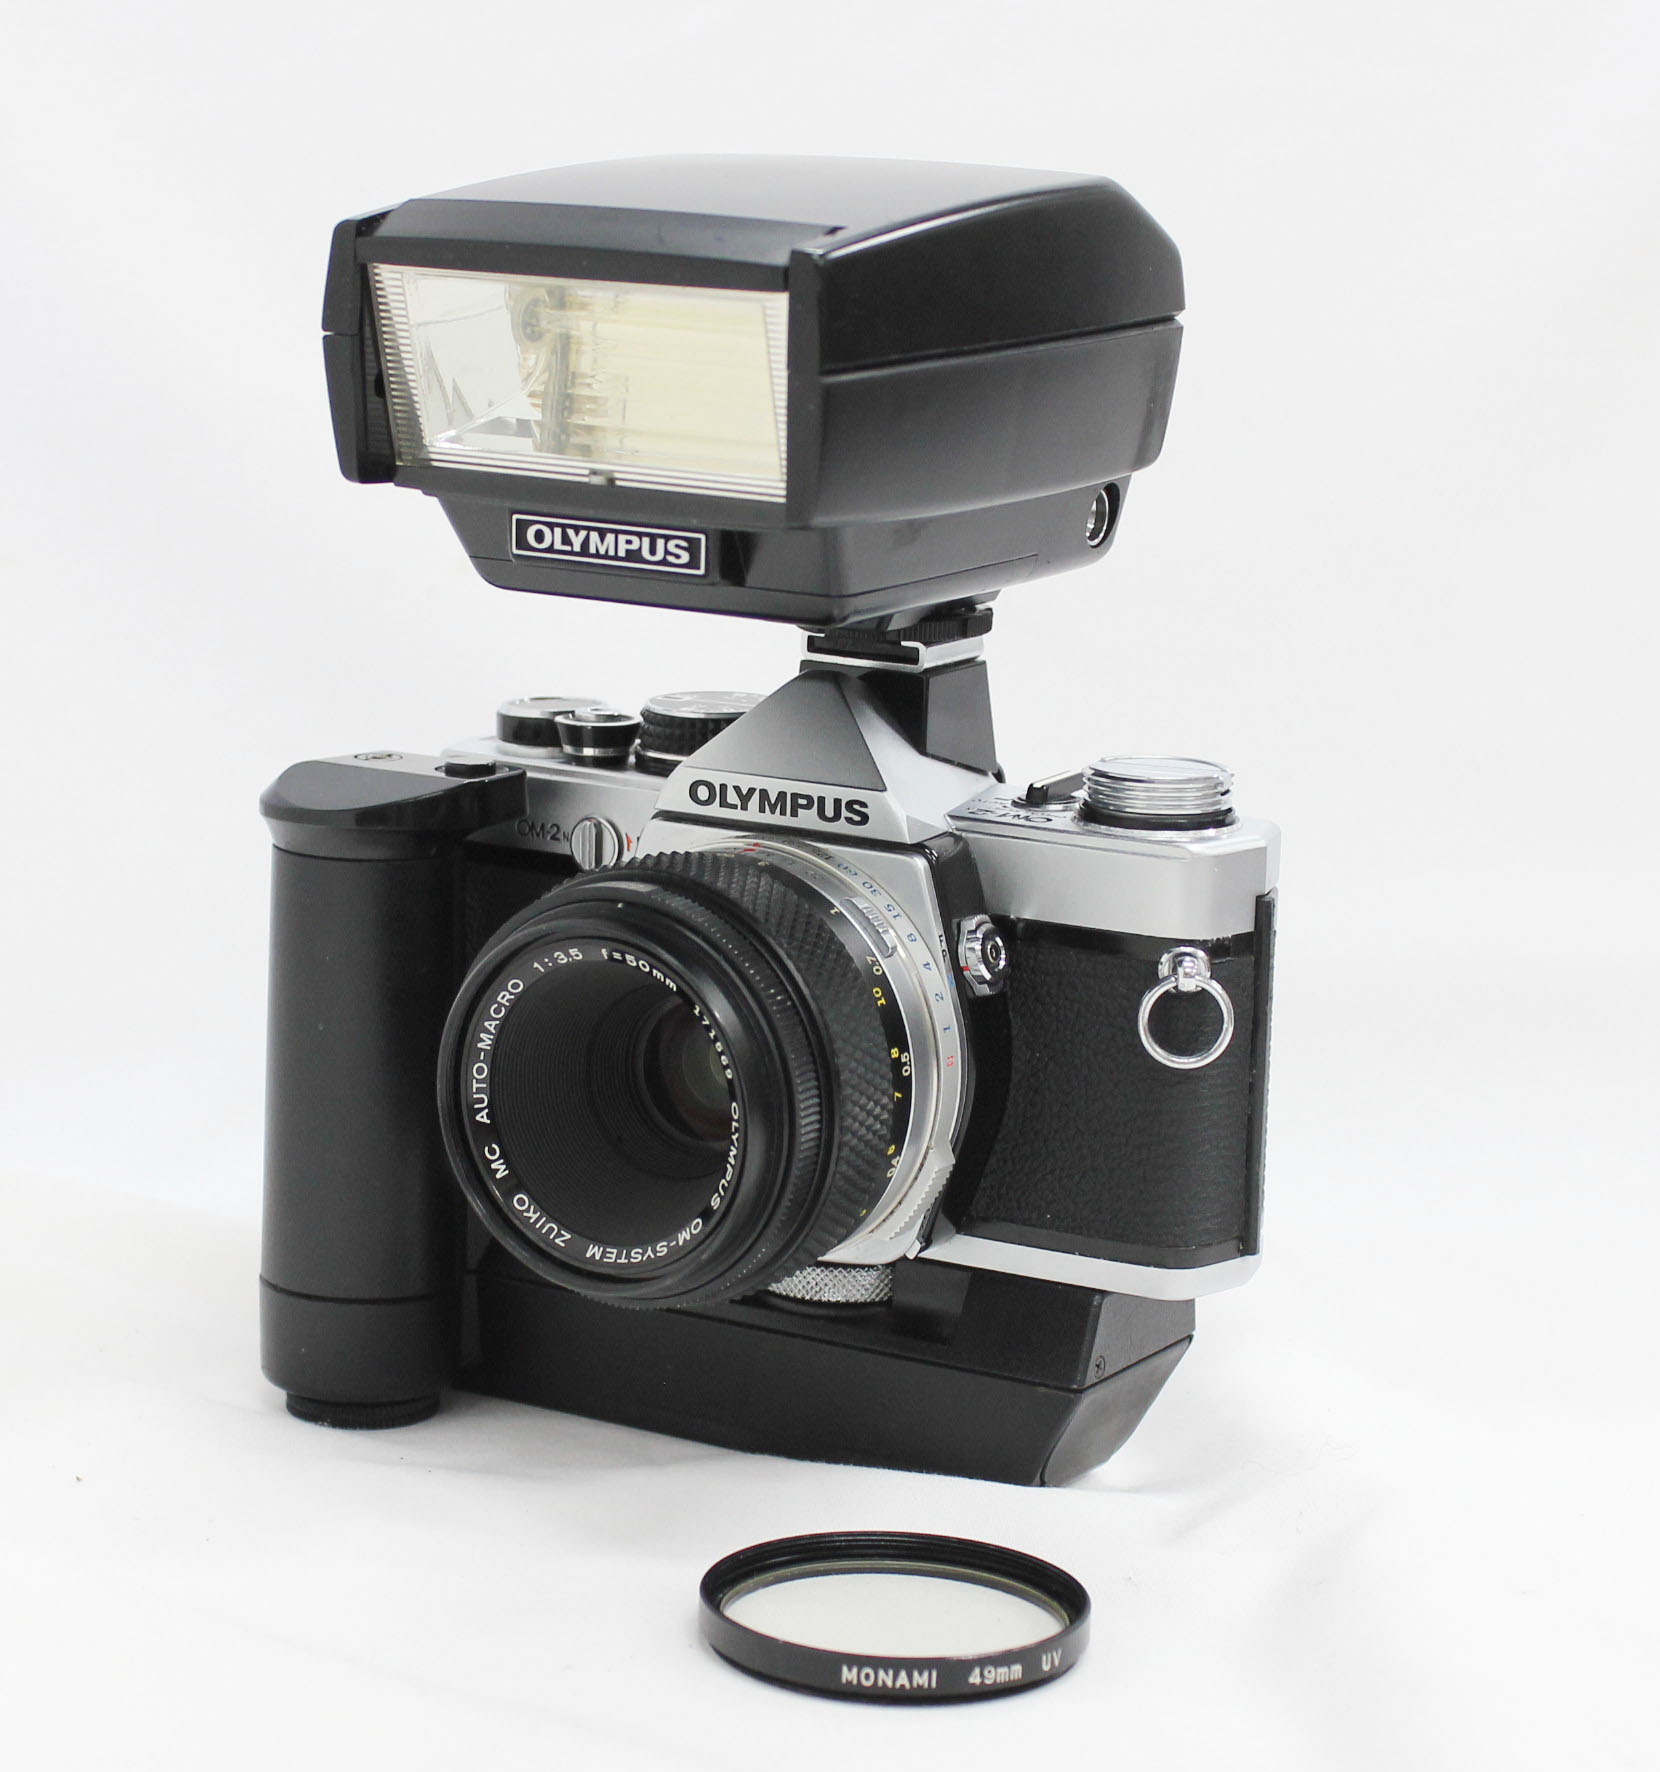 Olympus OM-2N 35mm SLR Film Camera with Macro 50mm F/3.5 Lens, Winder & Flash from Japan